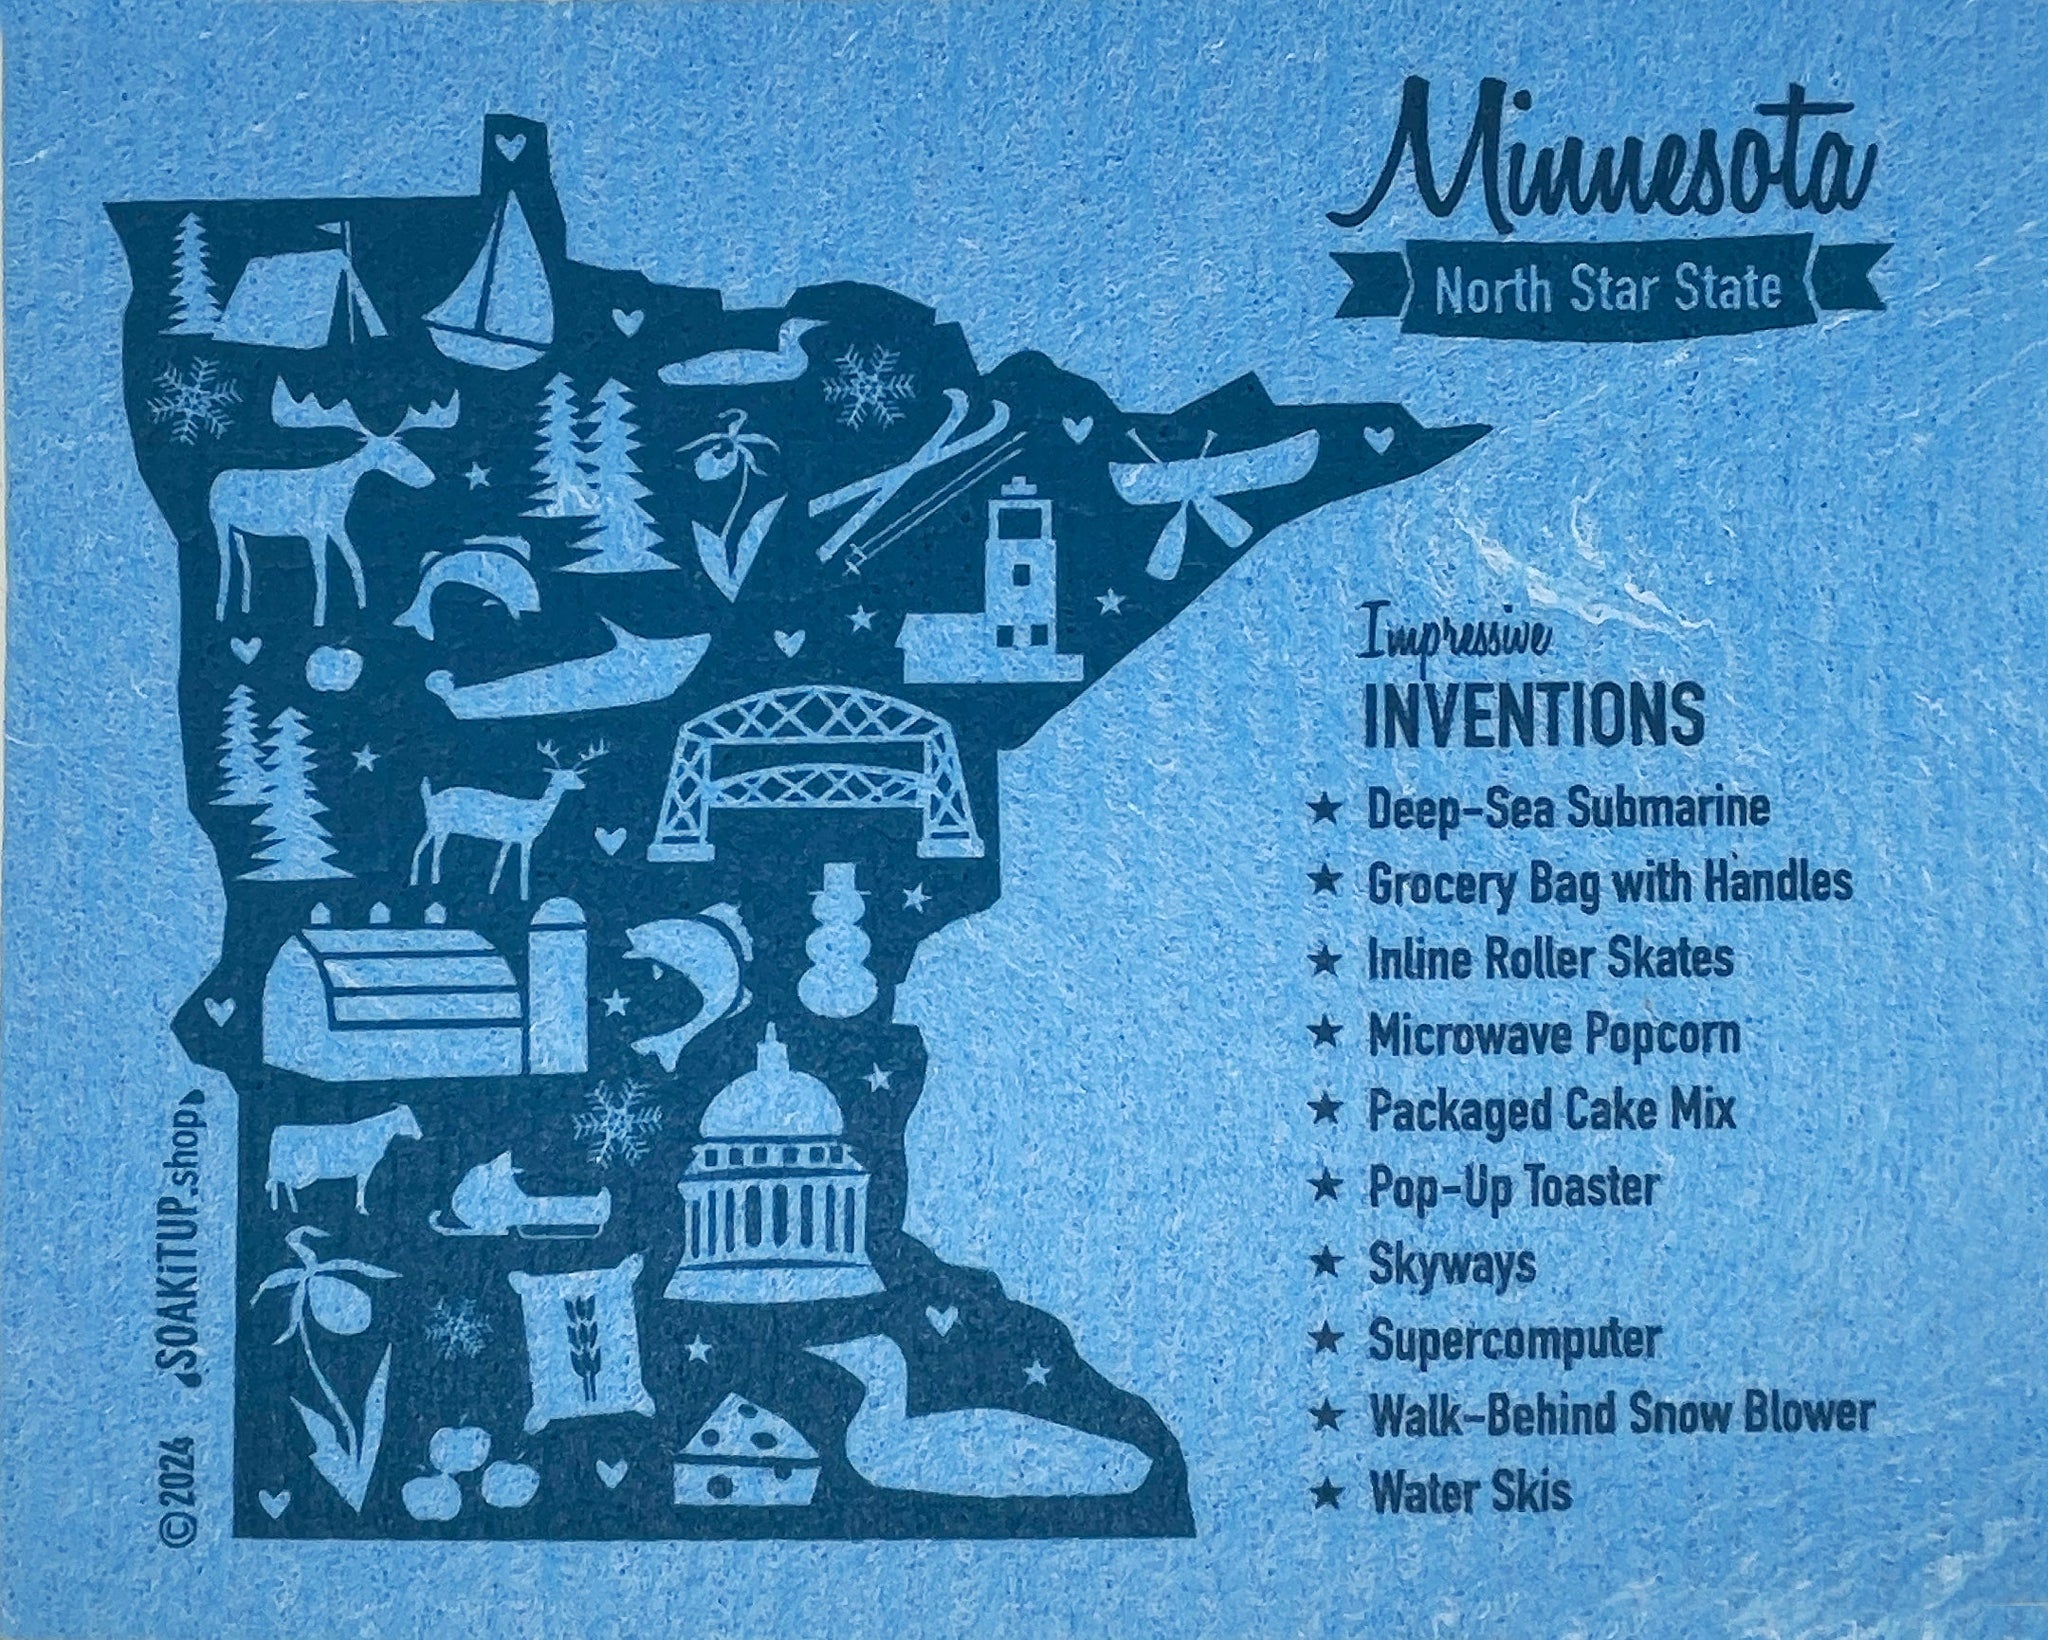 Minnesota Impressive Inventions Map - blue - Swedish